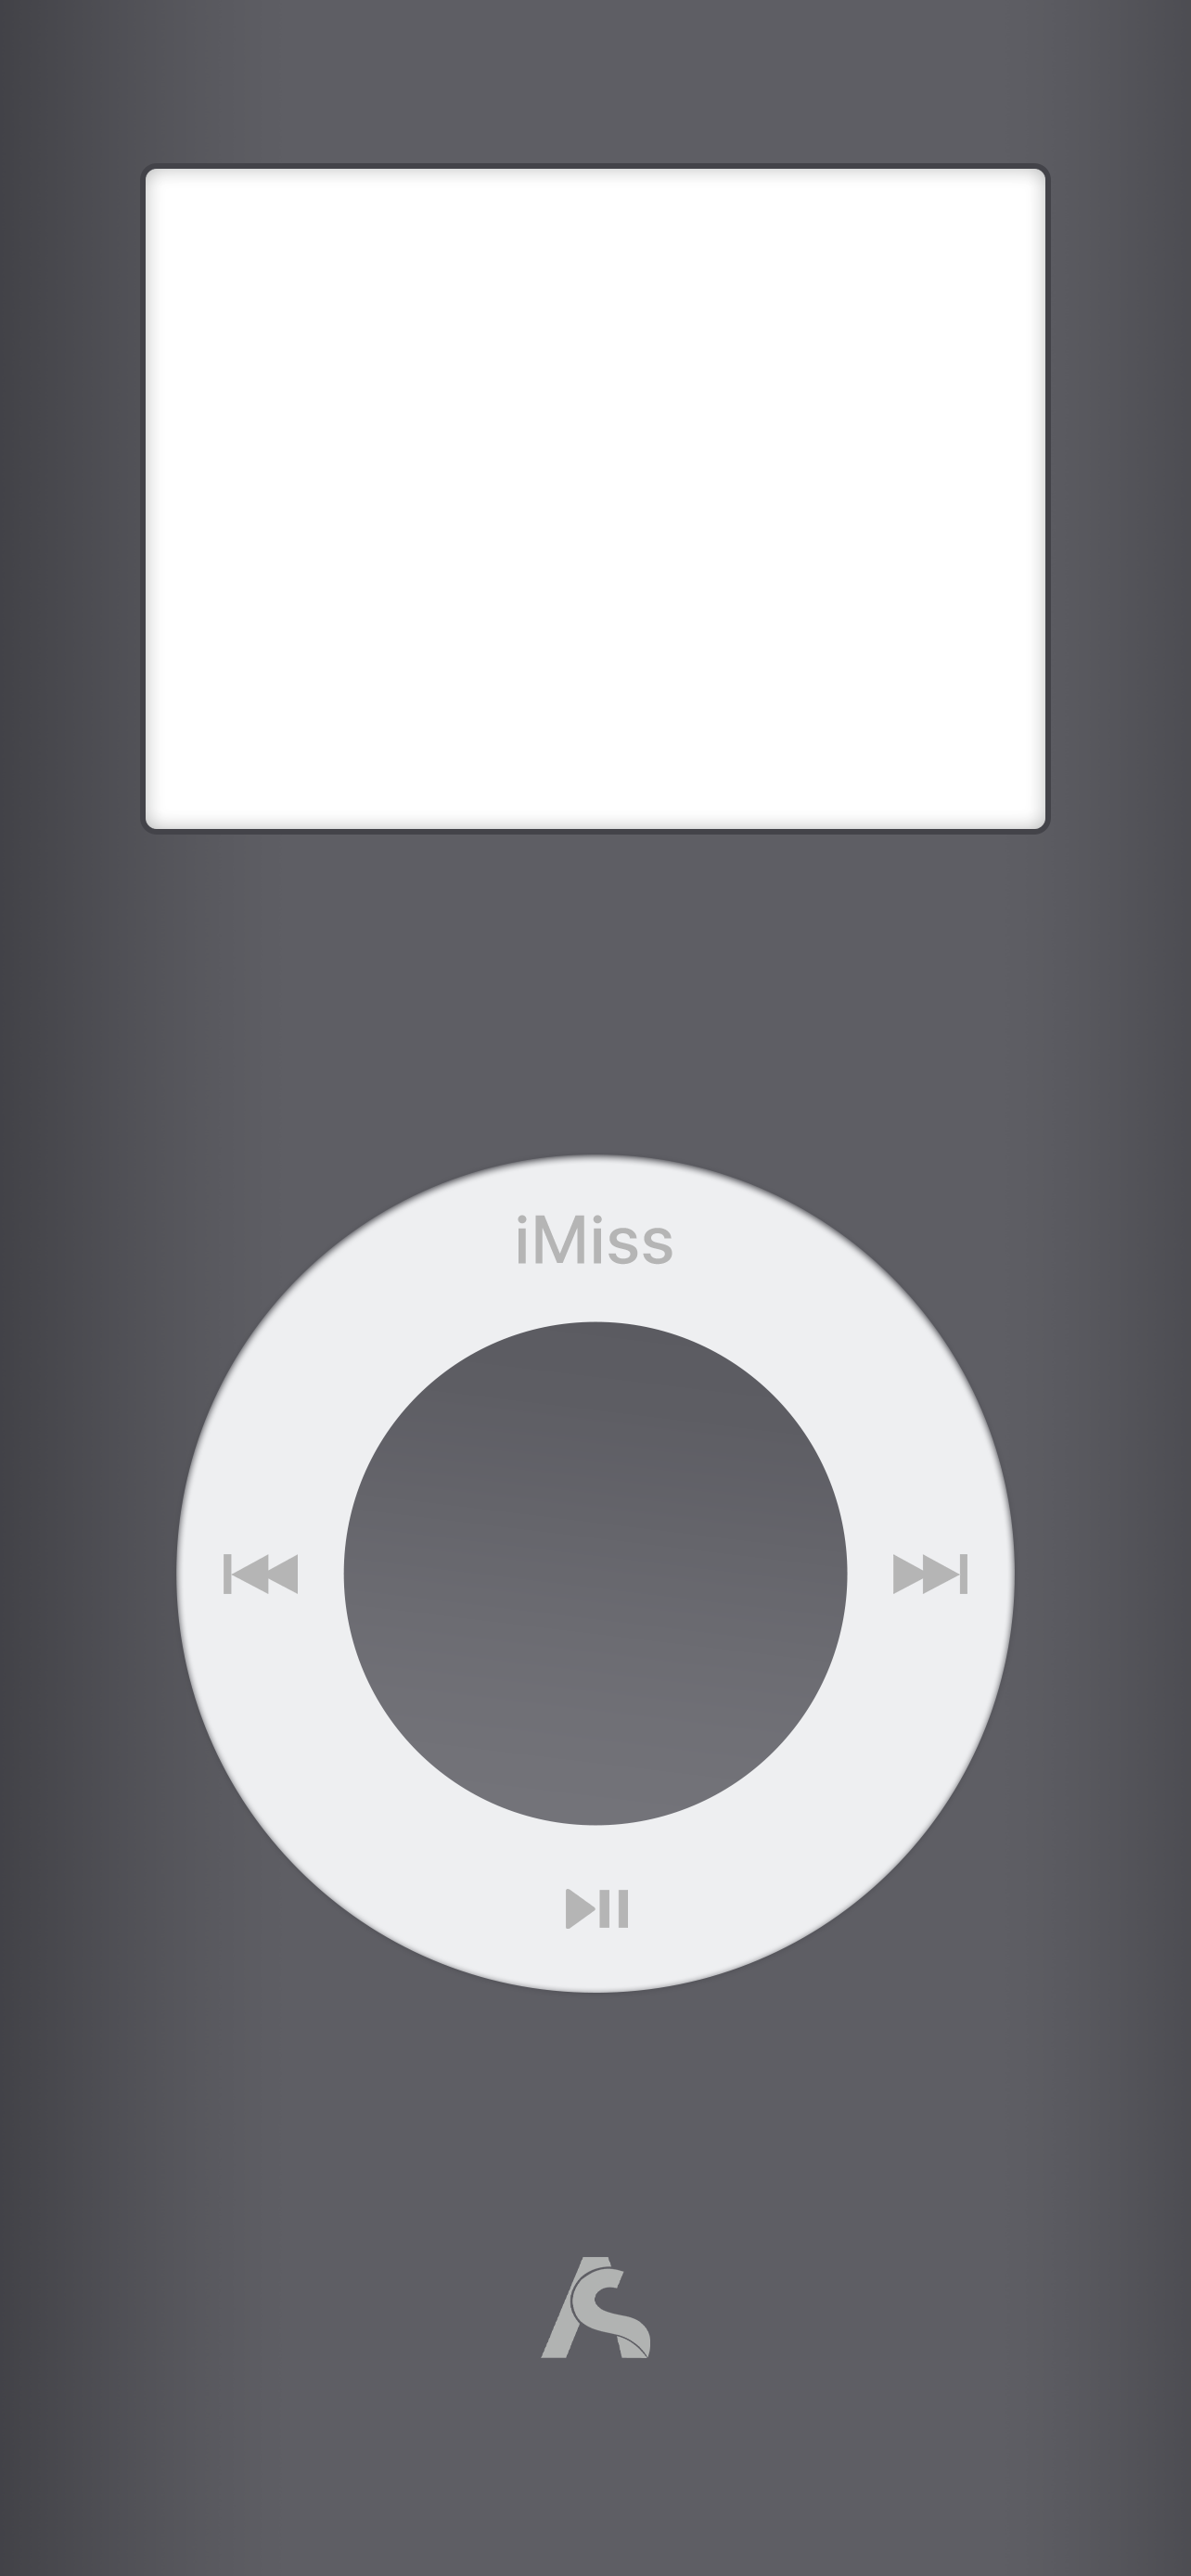 iMiss iPod iPhone Wallpaper